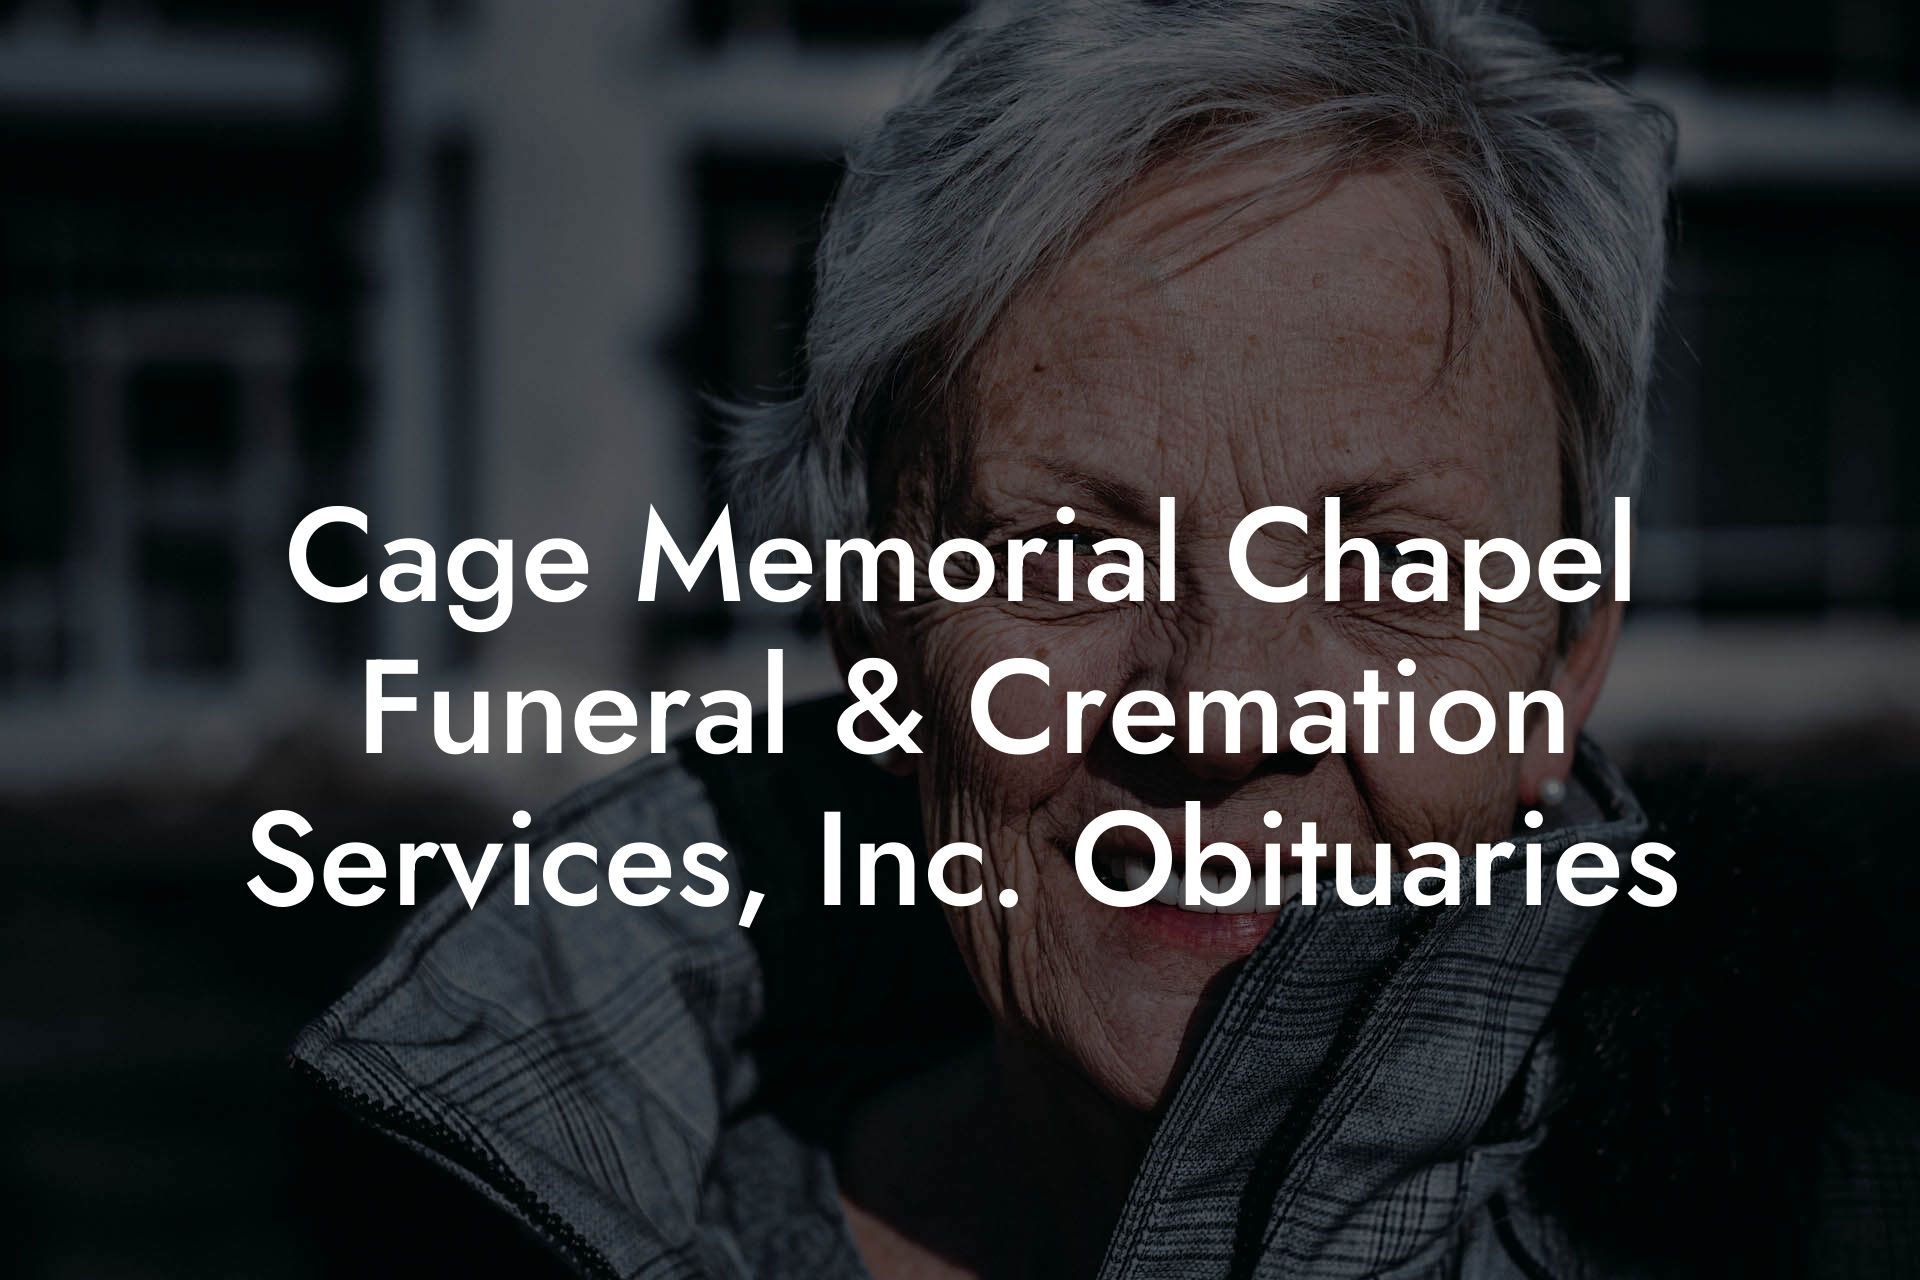 Cage Memorial Chapel Funeral & Cremation Services, Inc. Obituaries